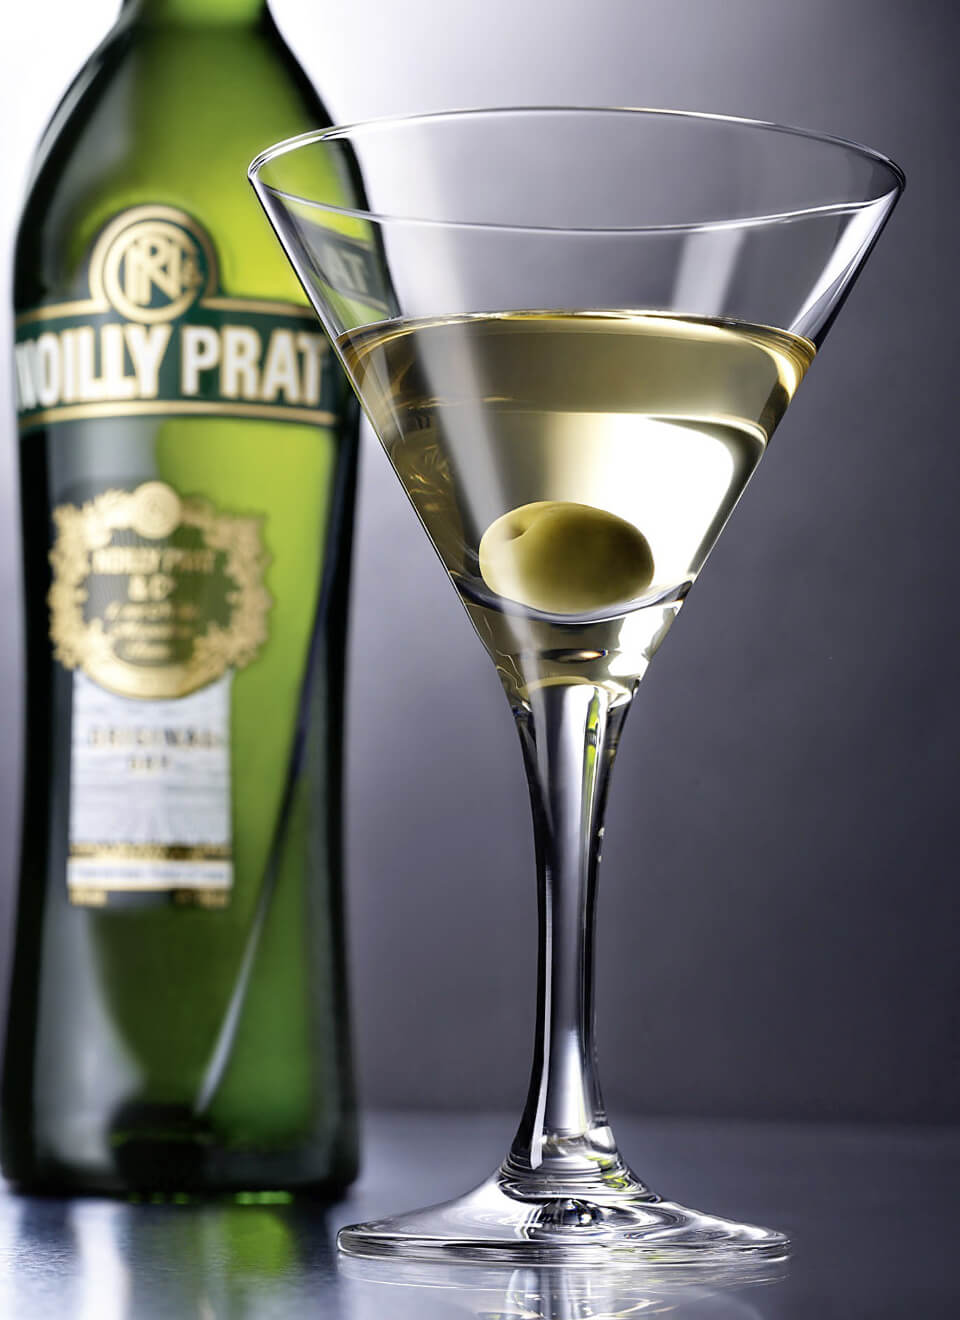 Noilly Prat Dry Vermouth 1 L